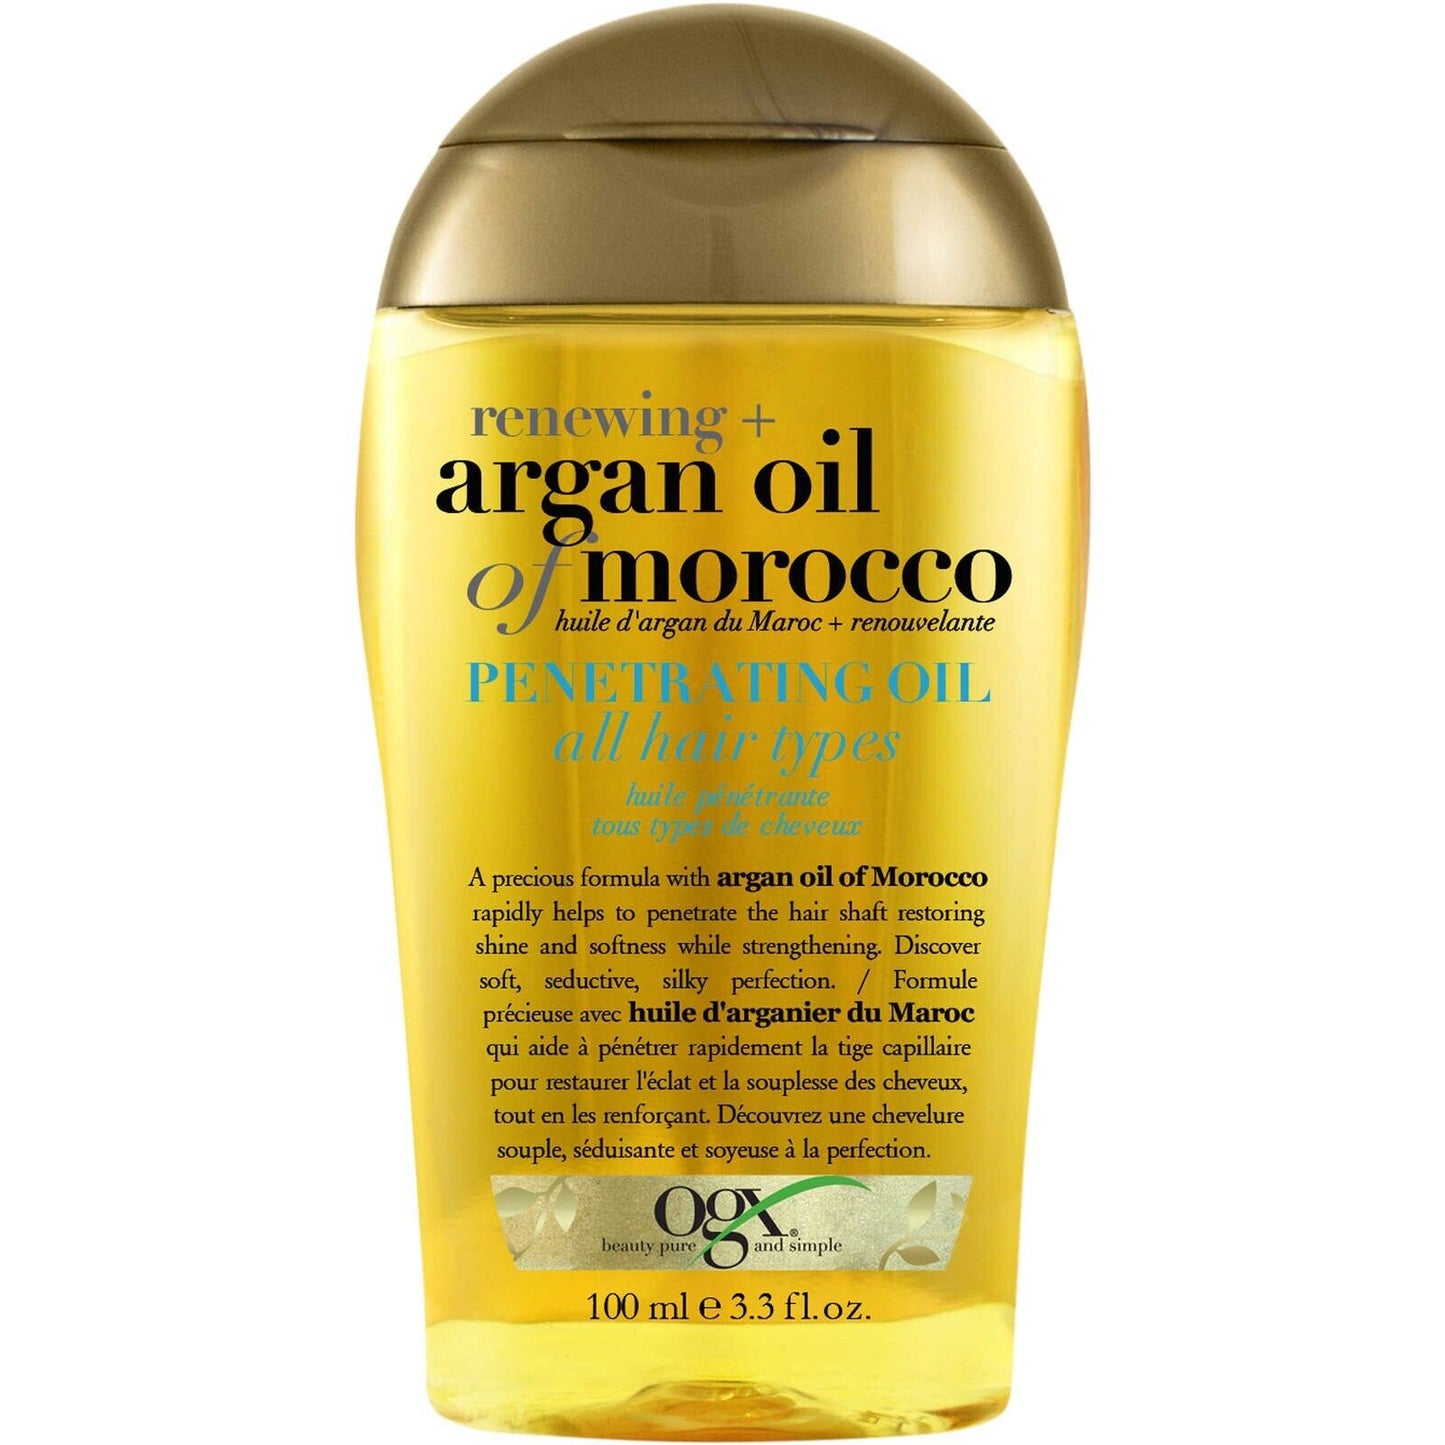 OGX Renewing + Argan Oil of Morocco Penetrating Oil Precious Formula 100ml NEW